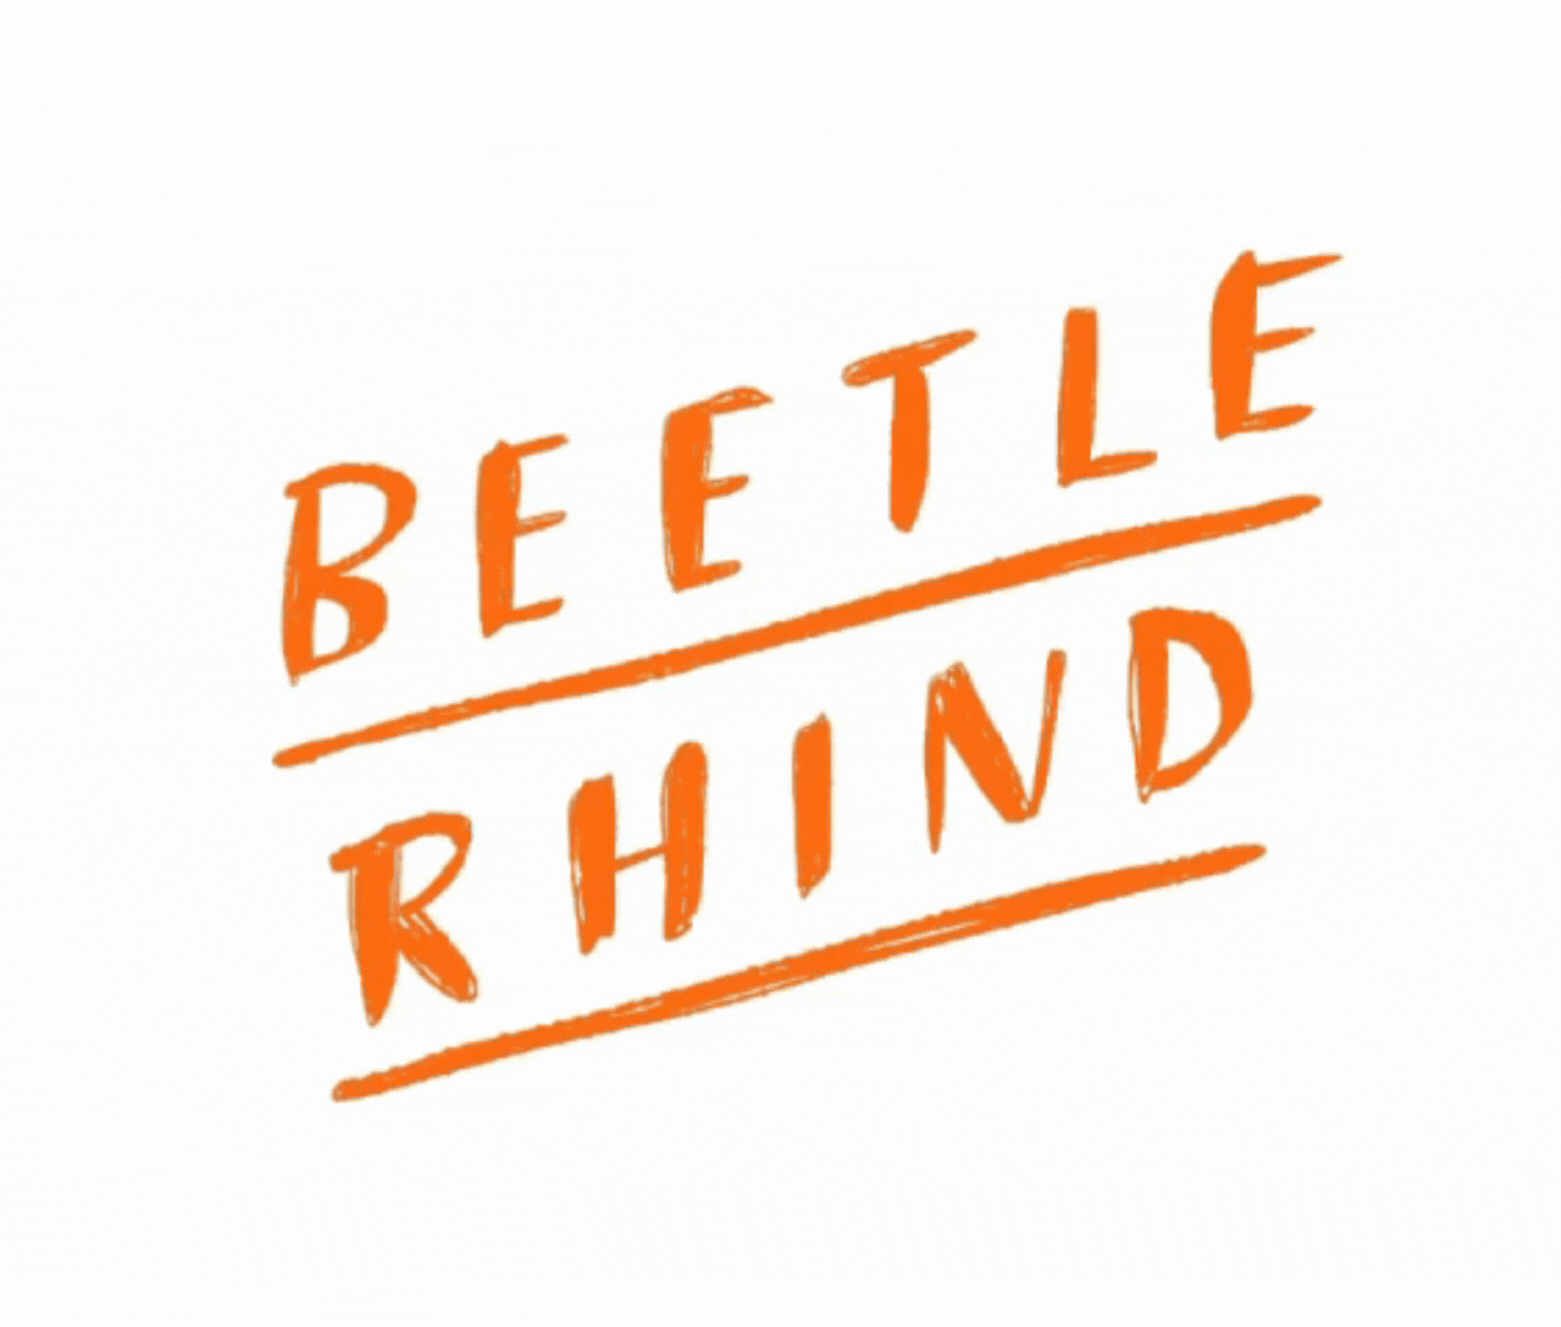 Beetle Rhind